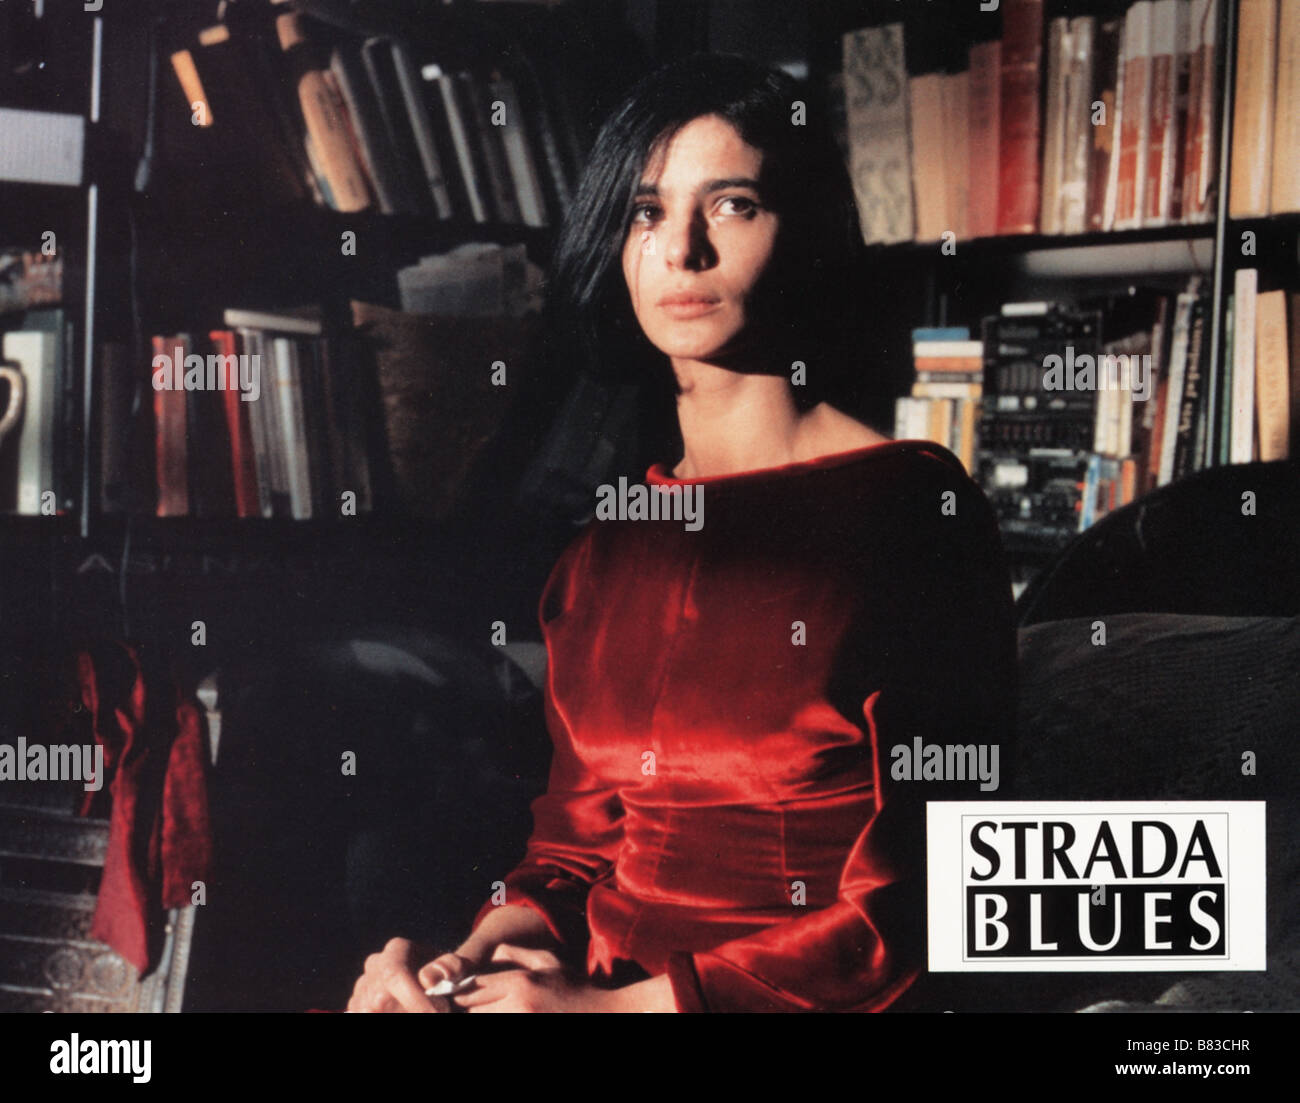 Strada blues Turnè  Year: 1990 - Italy Laura Morante  Director: Gabriele Salvatores Stock Photo